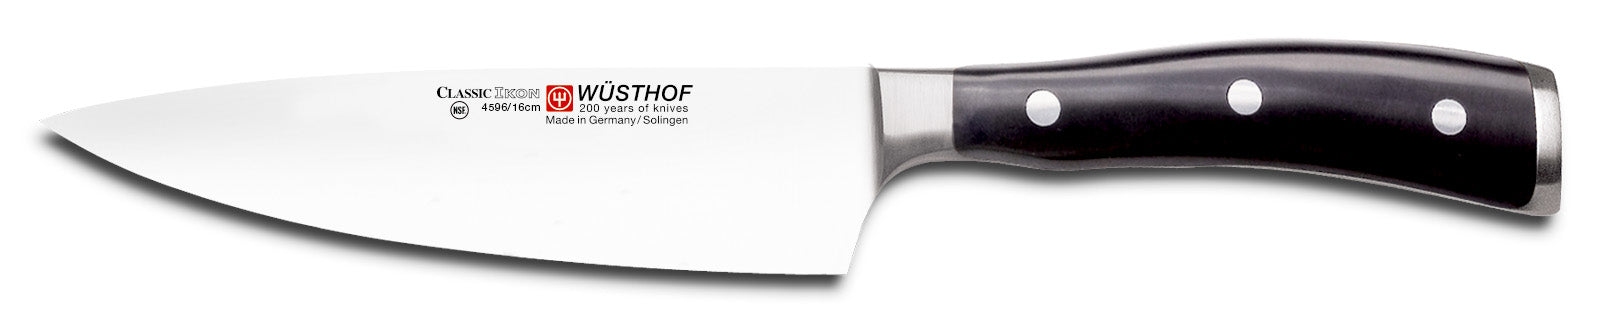 Classic ikon cook's knife 6"